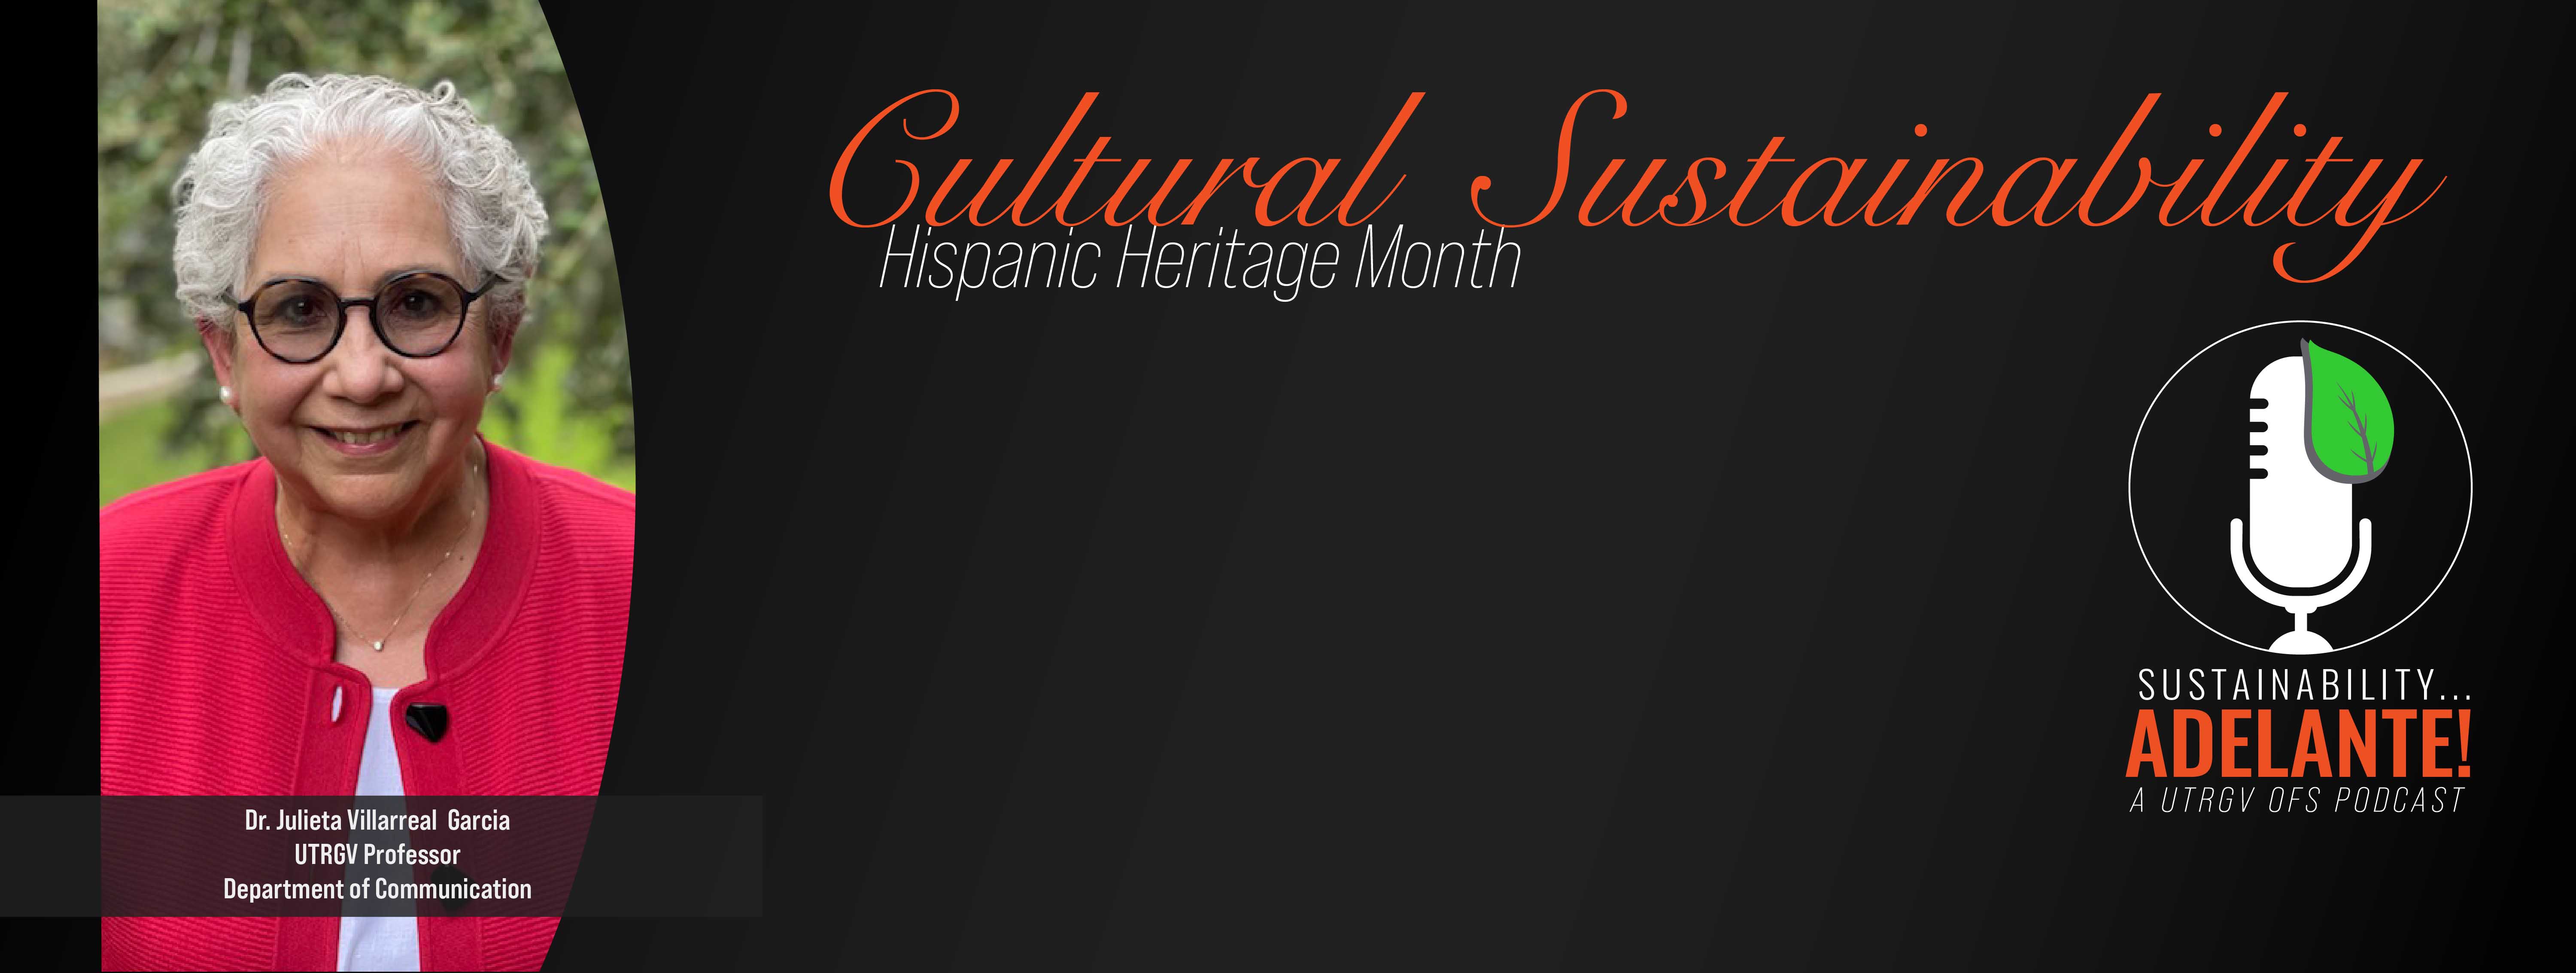 Cultural Sustainability Hispanic Heritage Month. Dr. Julieta Vilarreal Garcia UTRGV Professor Department of Communication. Sustainability Adelante! A UTRGV OFS Podcast